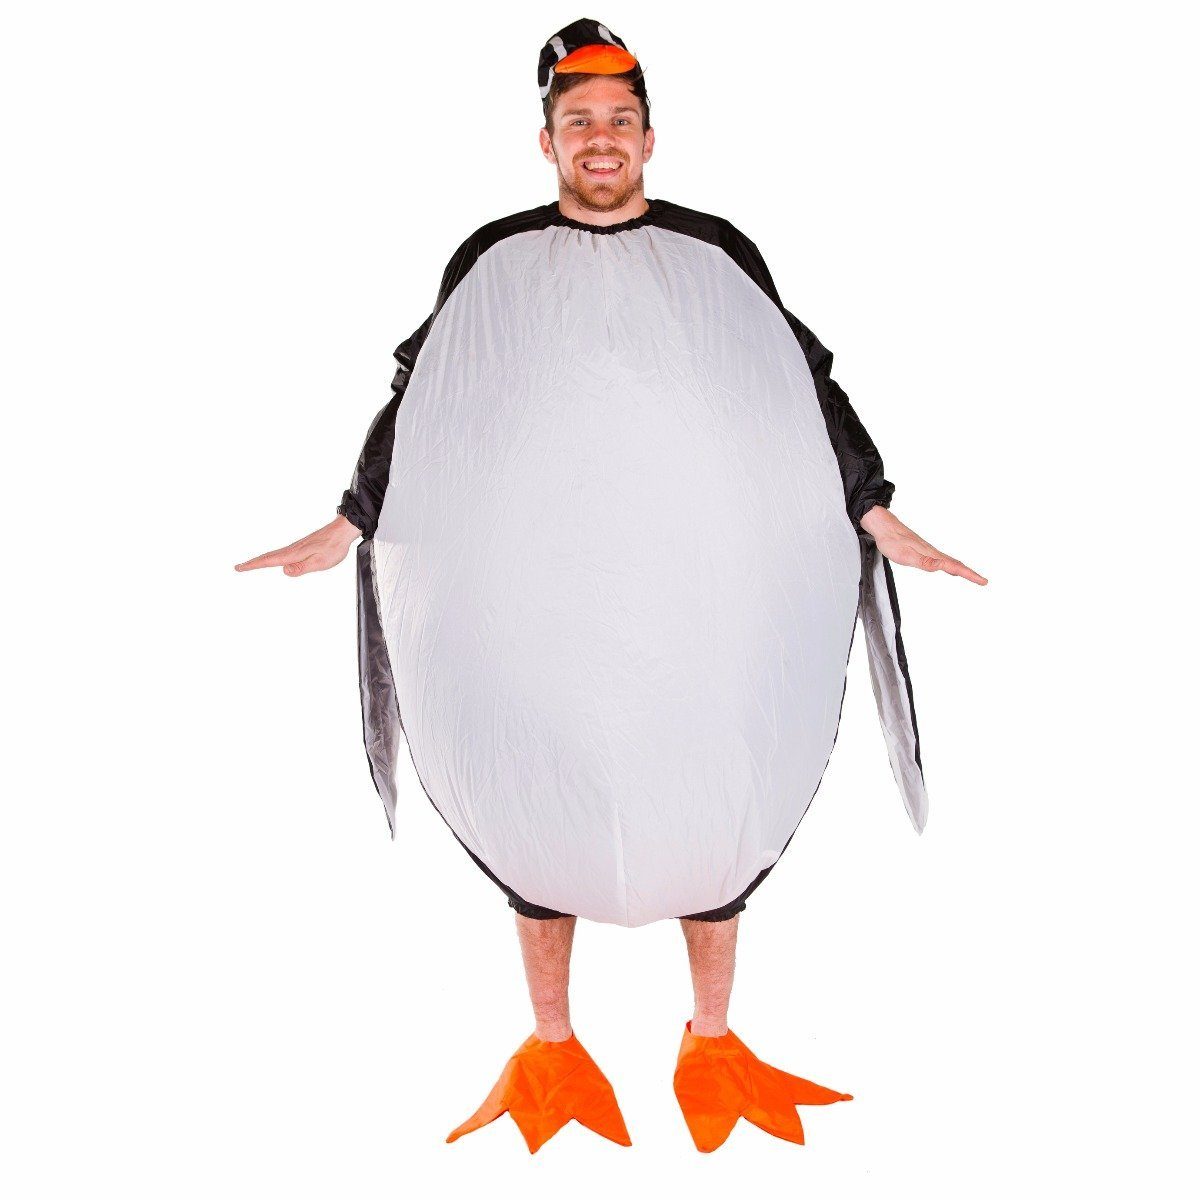 Fancy Dress - Inflatable Penguin Costume